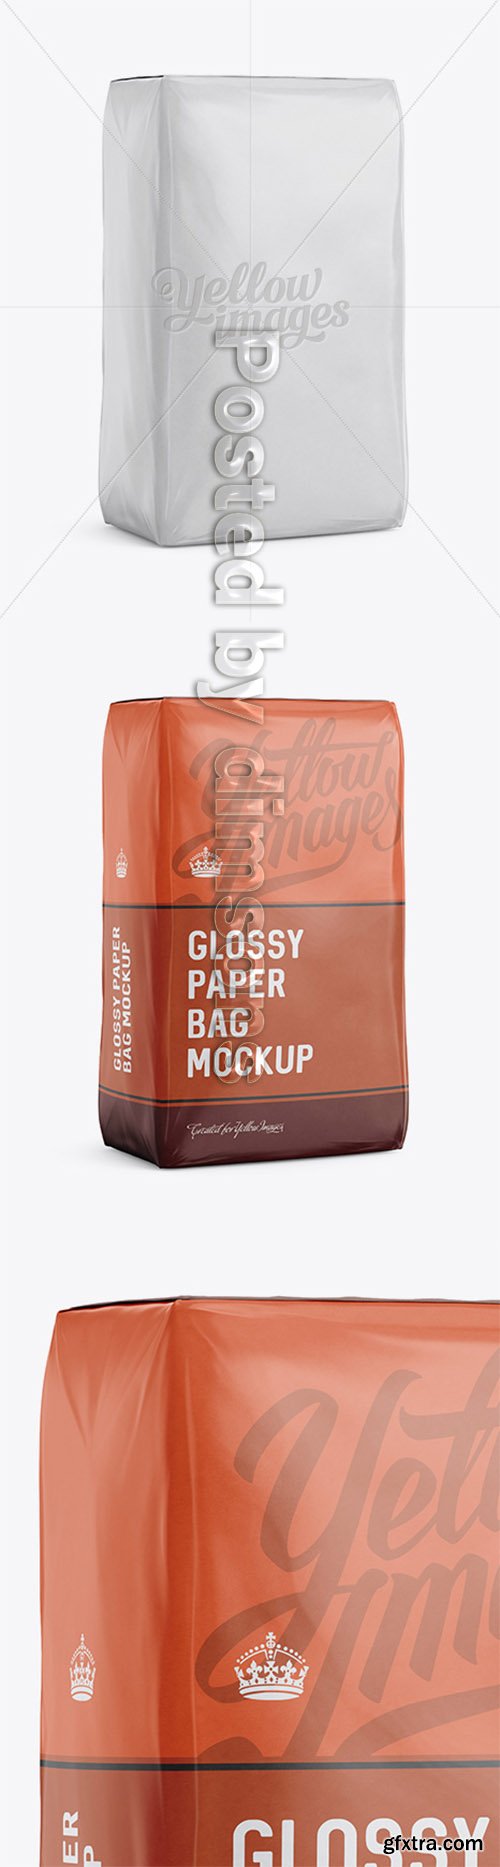 Glossy Paper Bag Mockup - Halfside View 13597